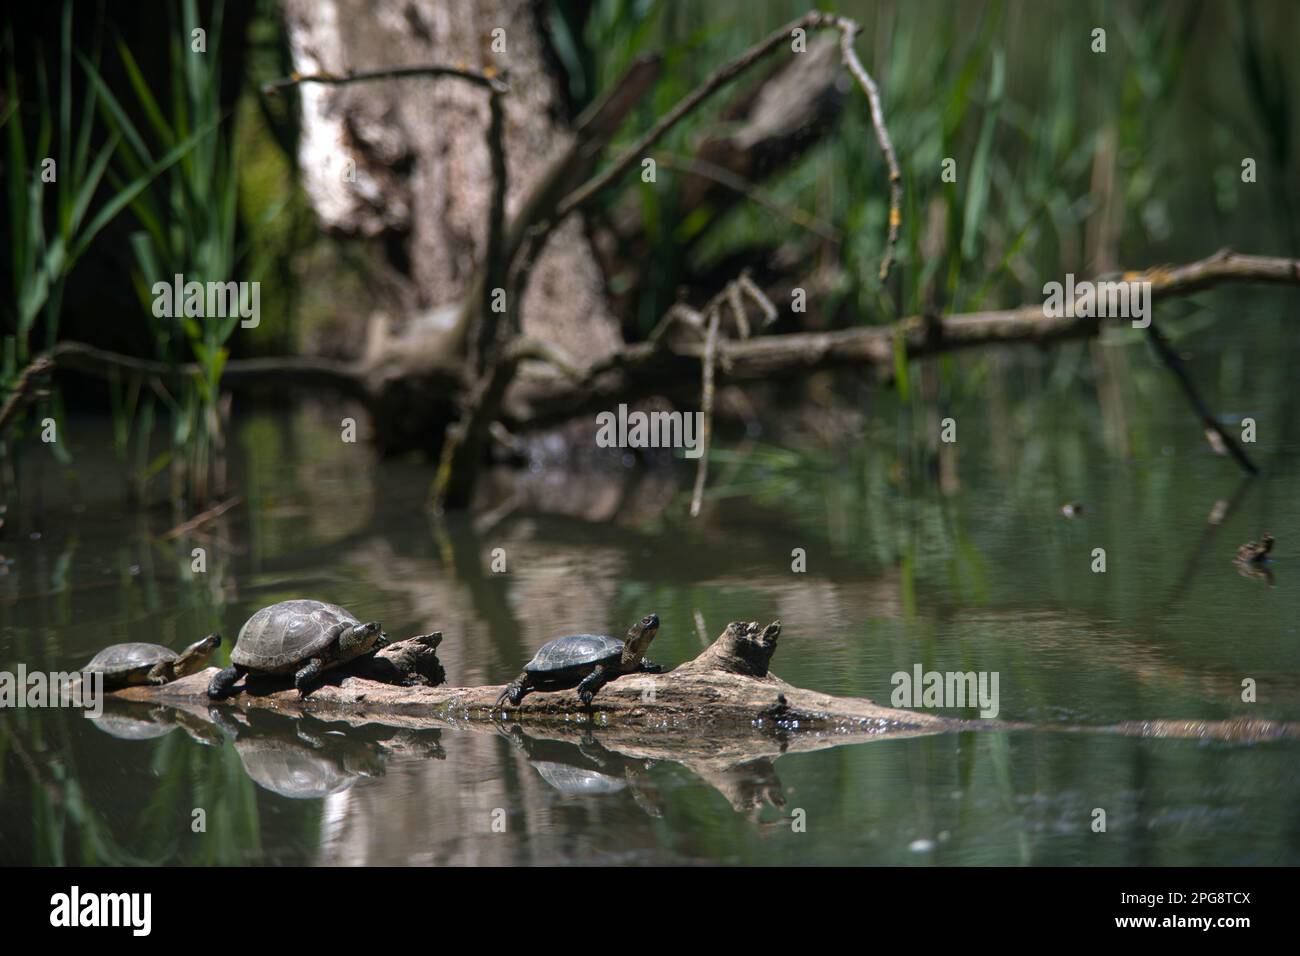 tartaruga palustre; fiume sele, oasi wwf di persano, serre, salerno, campania, italia Foto de stock